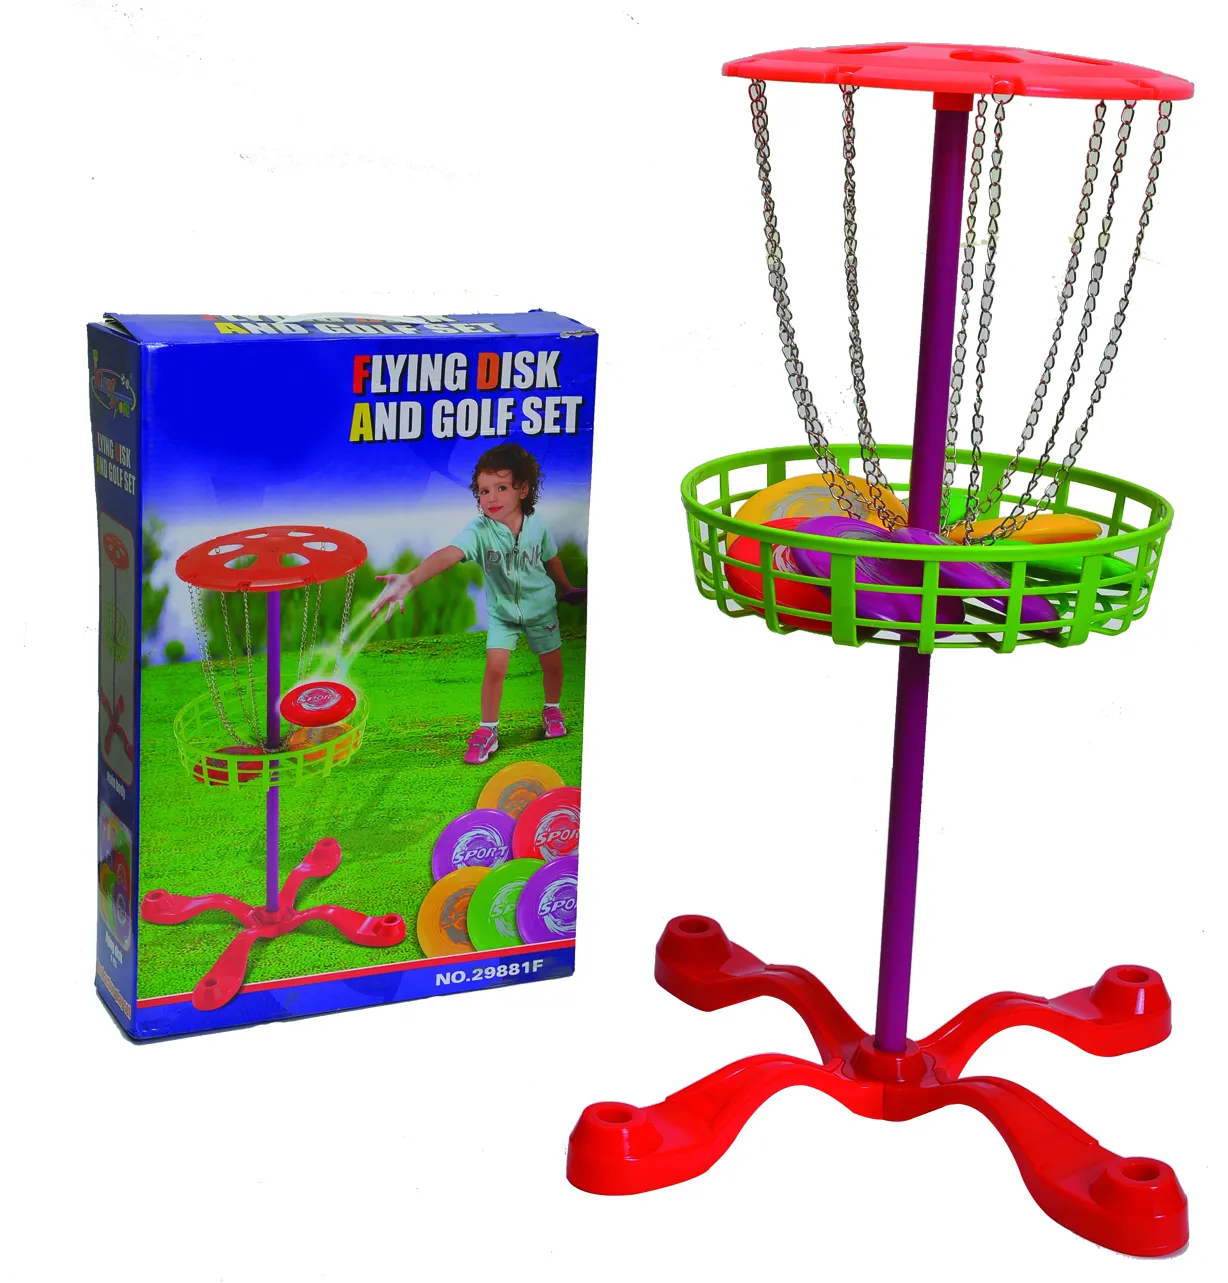 Promotional portable chain plastic Catapult kids flying disc golf target set